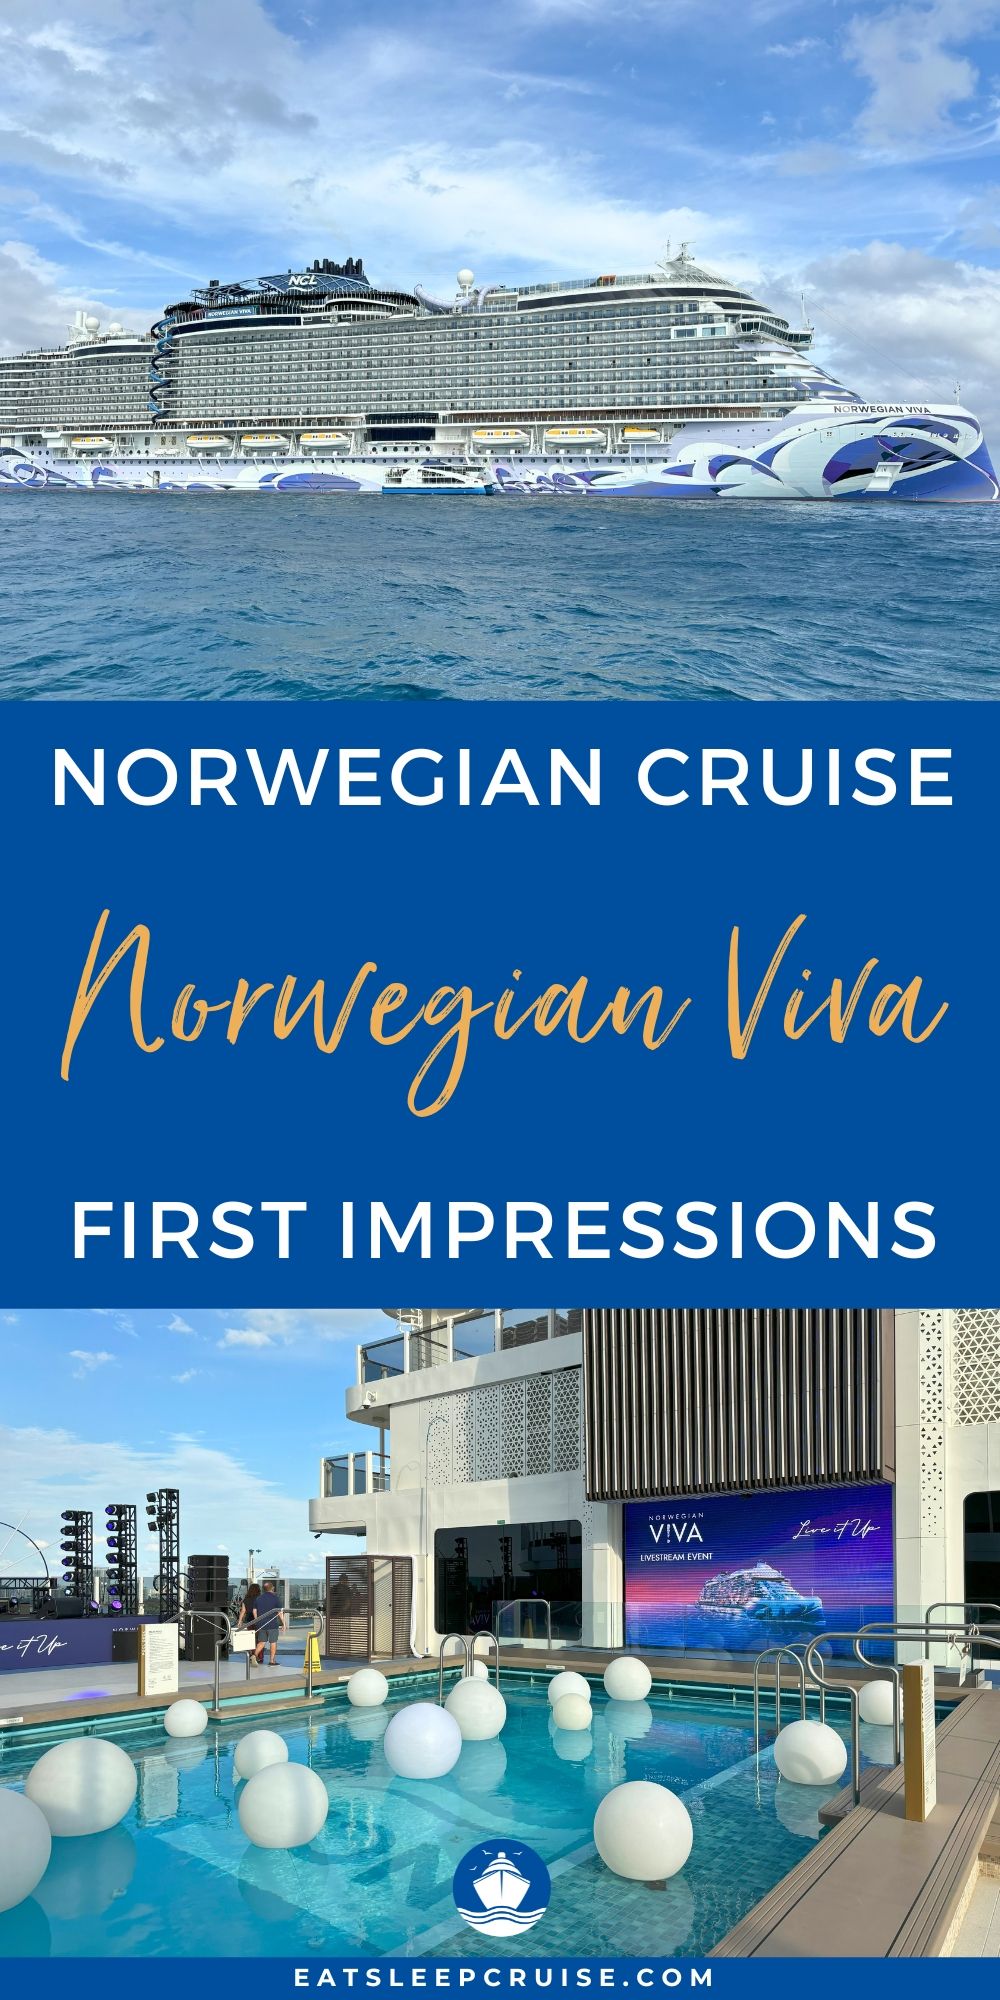 My First Impressions of Norwegian Viva